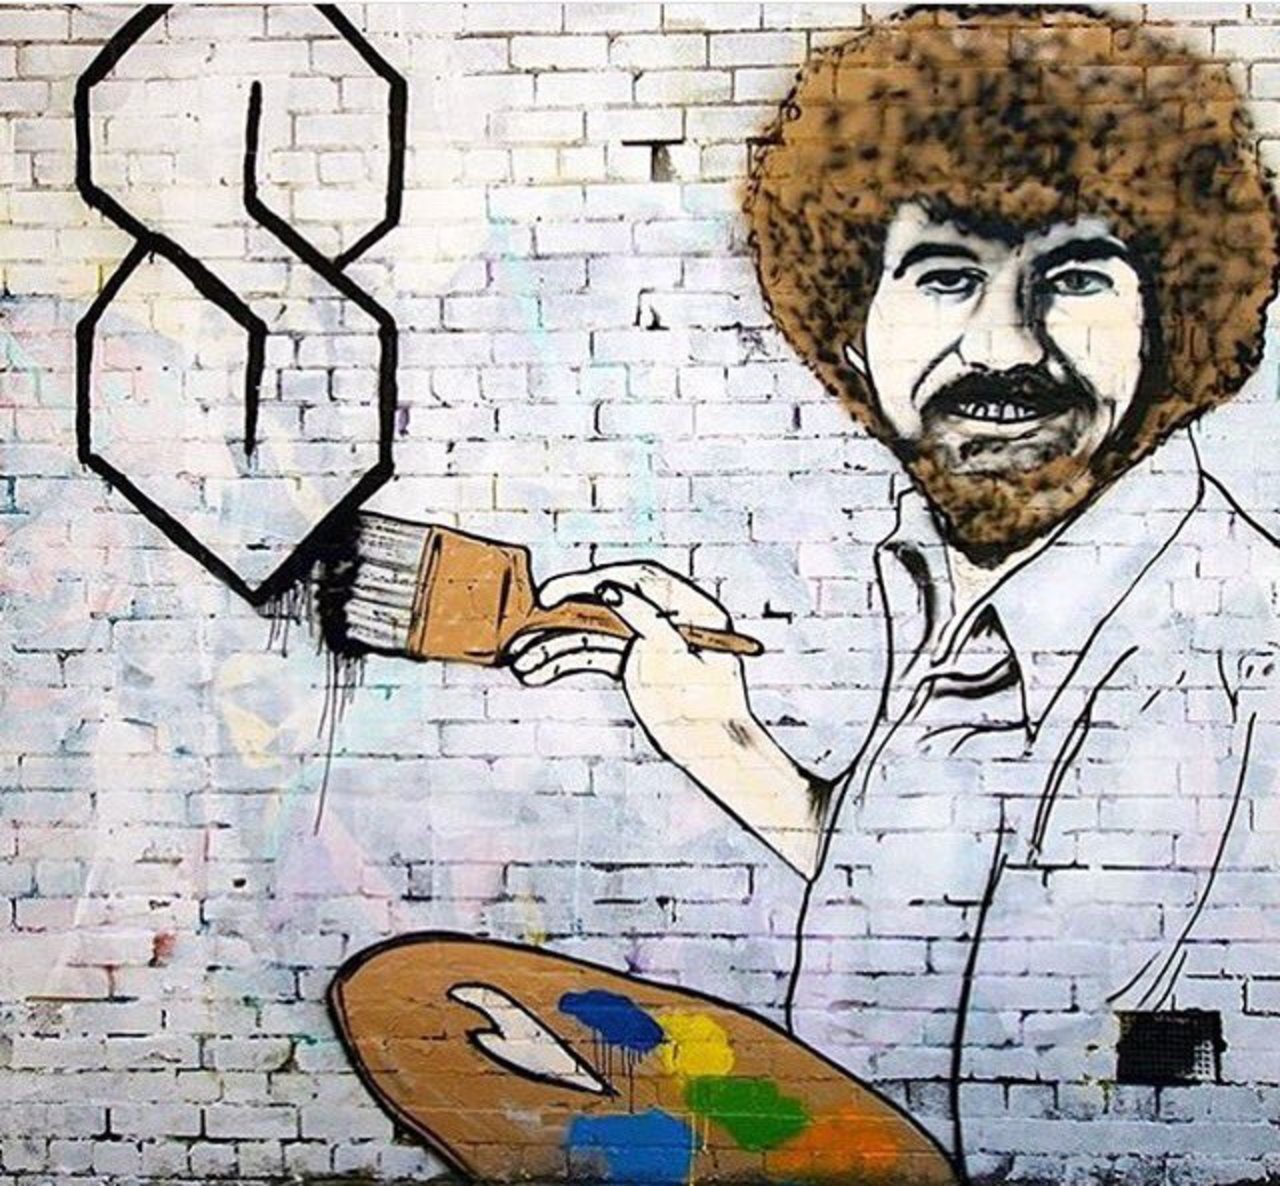 my life is complete. Bob Ross street art by Lush Melbourne ,Australia#streetart #graffiti #mural https://t.co/27f9eTWEtX